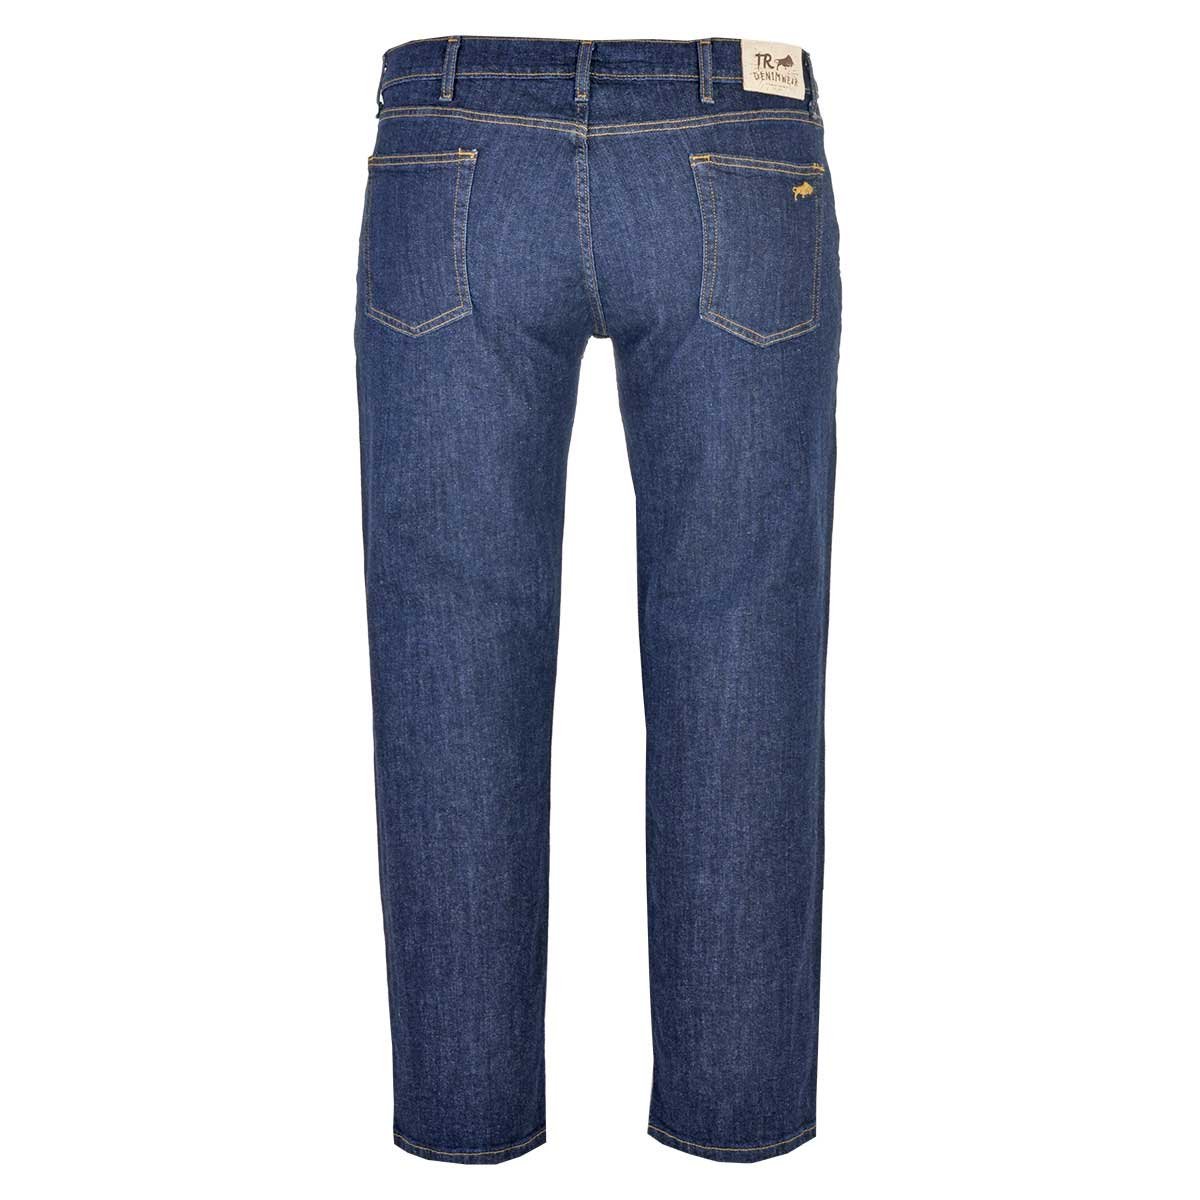 Jeans Basico Jagger Slim Tr Denimwear